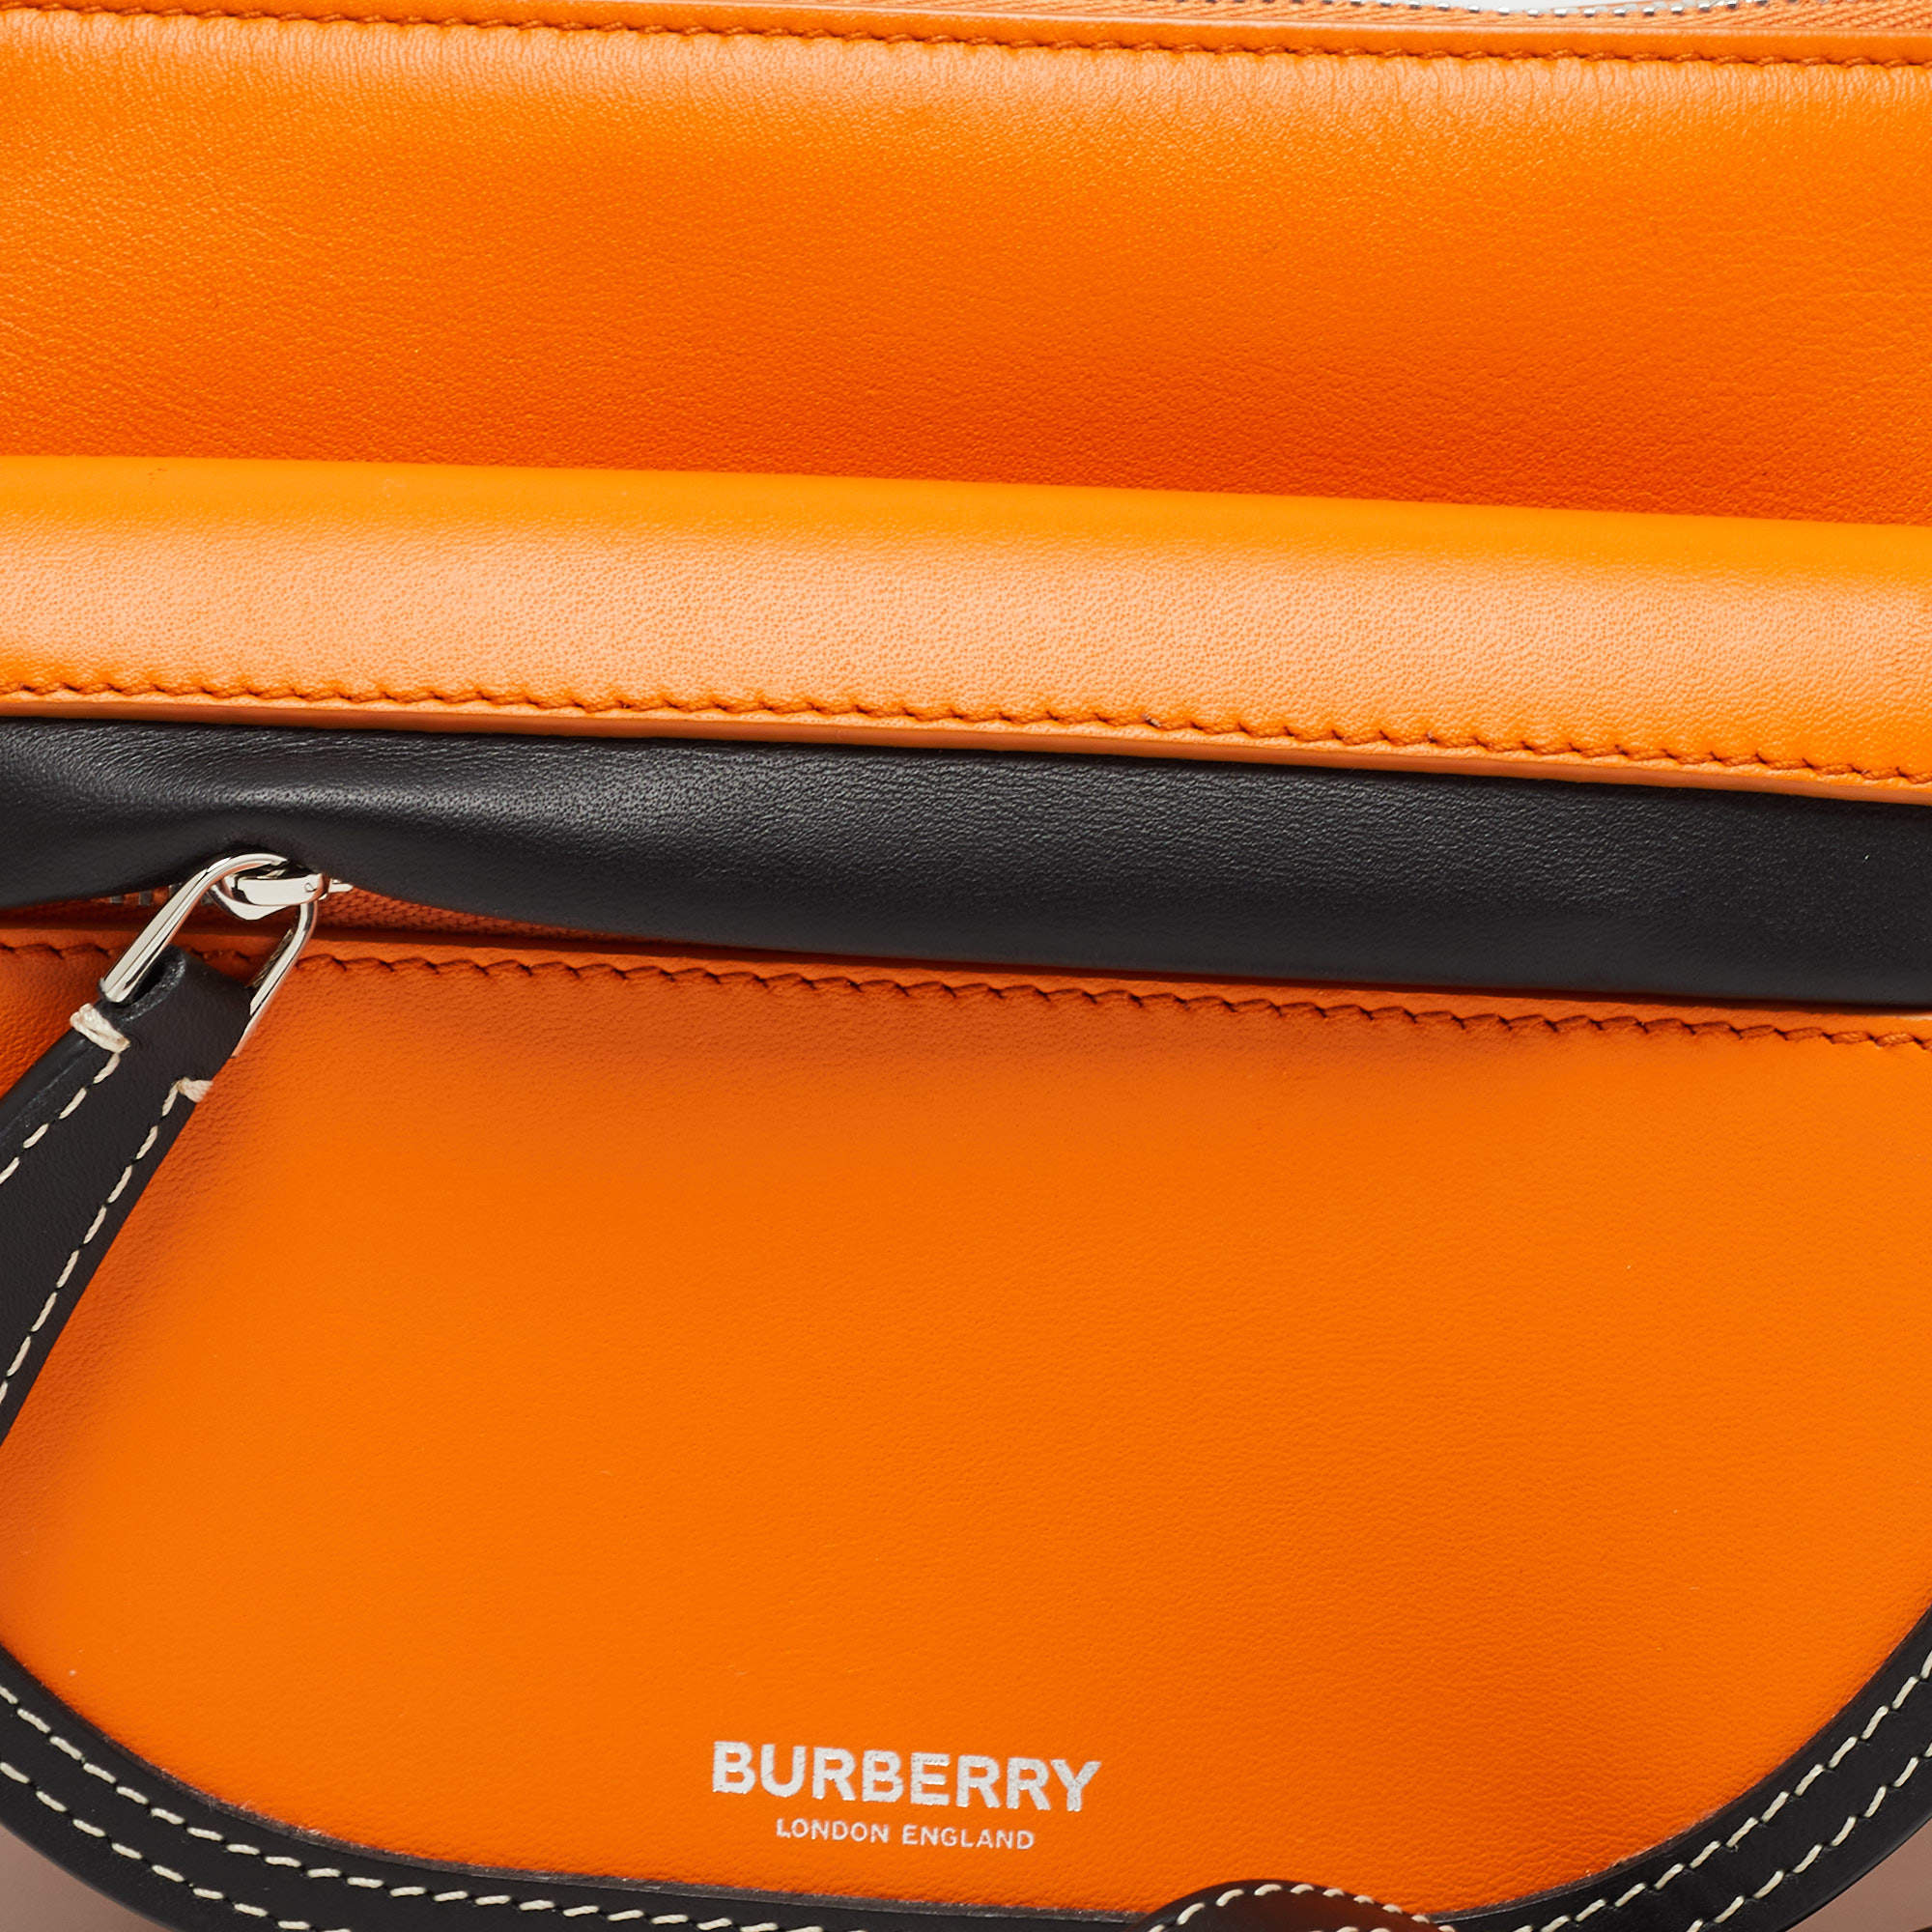 BURBERRY LEATHER AUTHENTIC COSMETIC BAG PURSE CLUTCH ORANGE | eBay